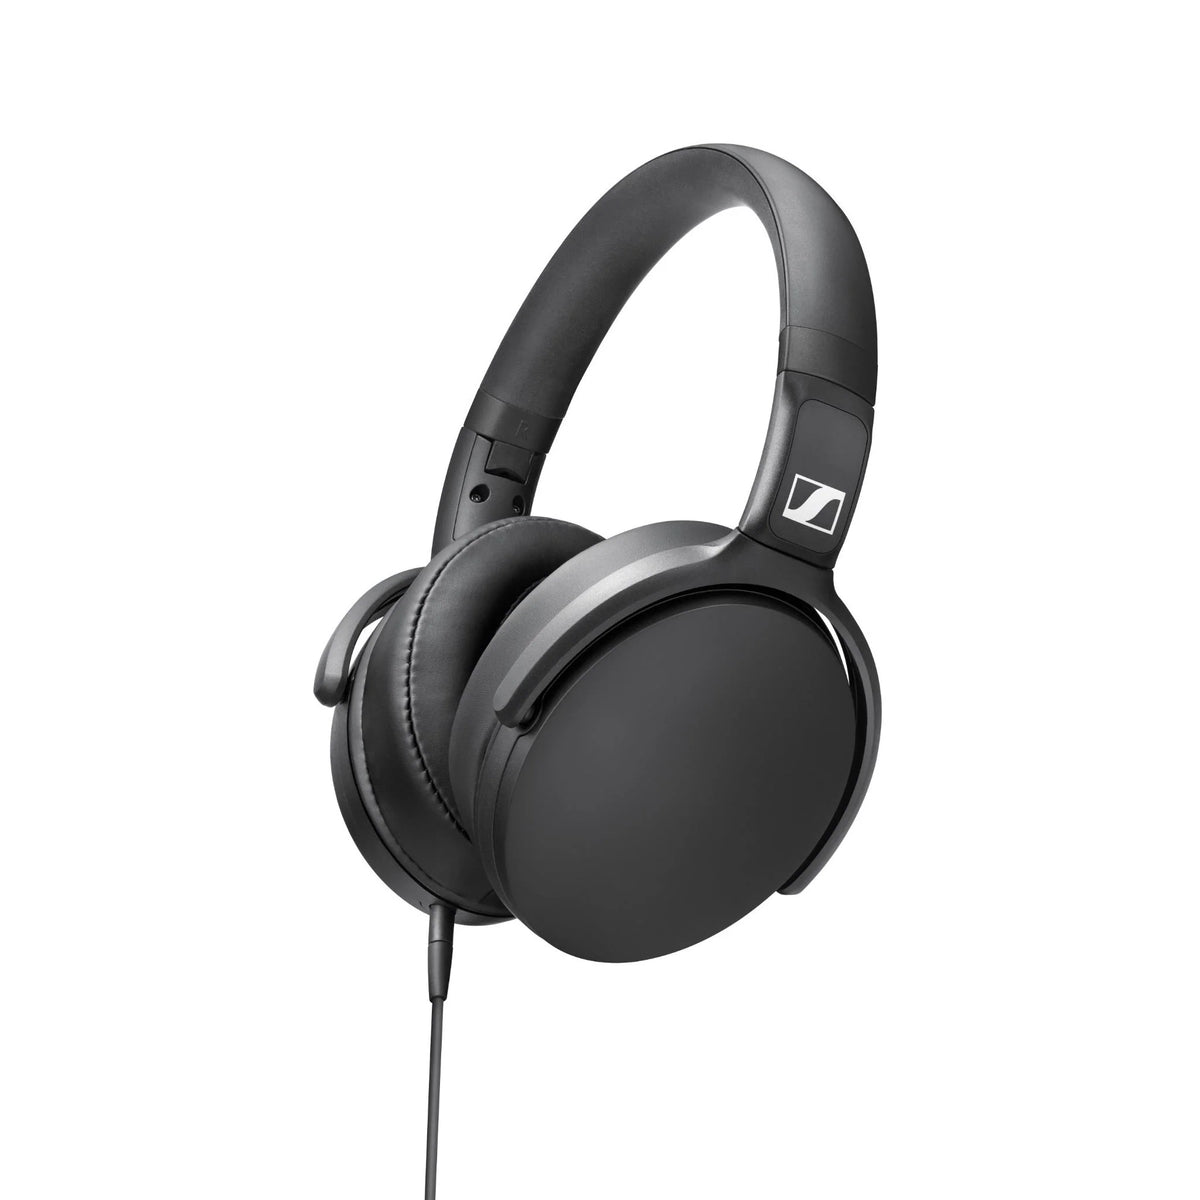 Sennheiser HD 400S Wired Headphones - Good Condition